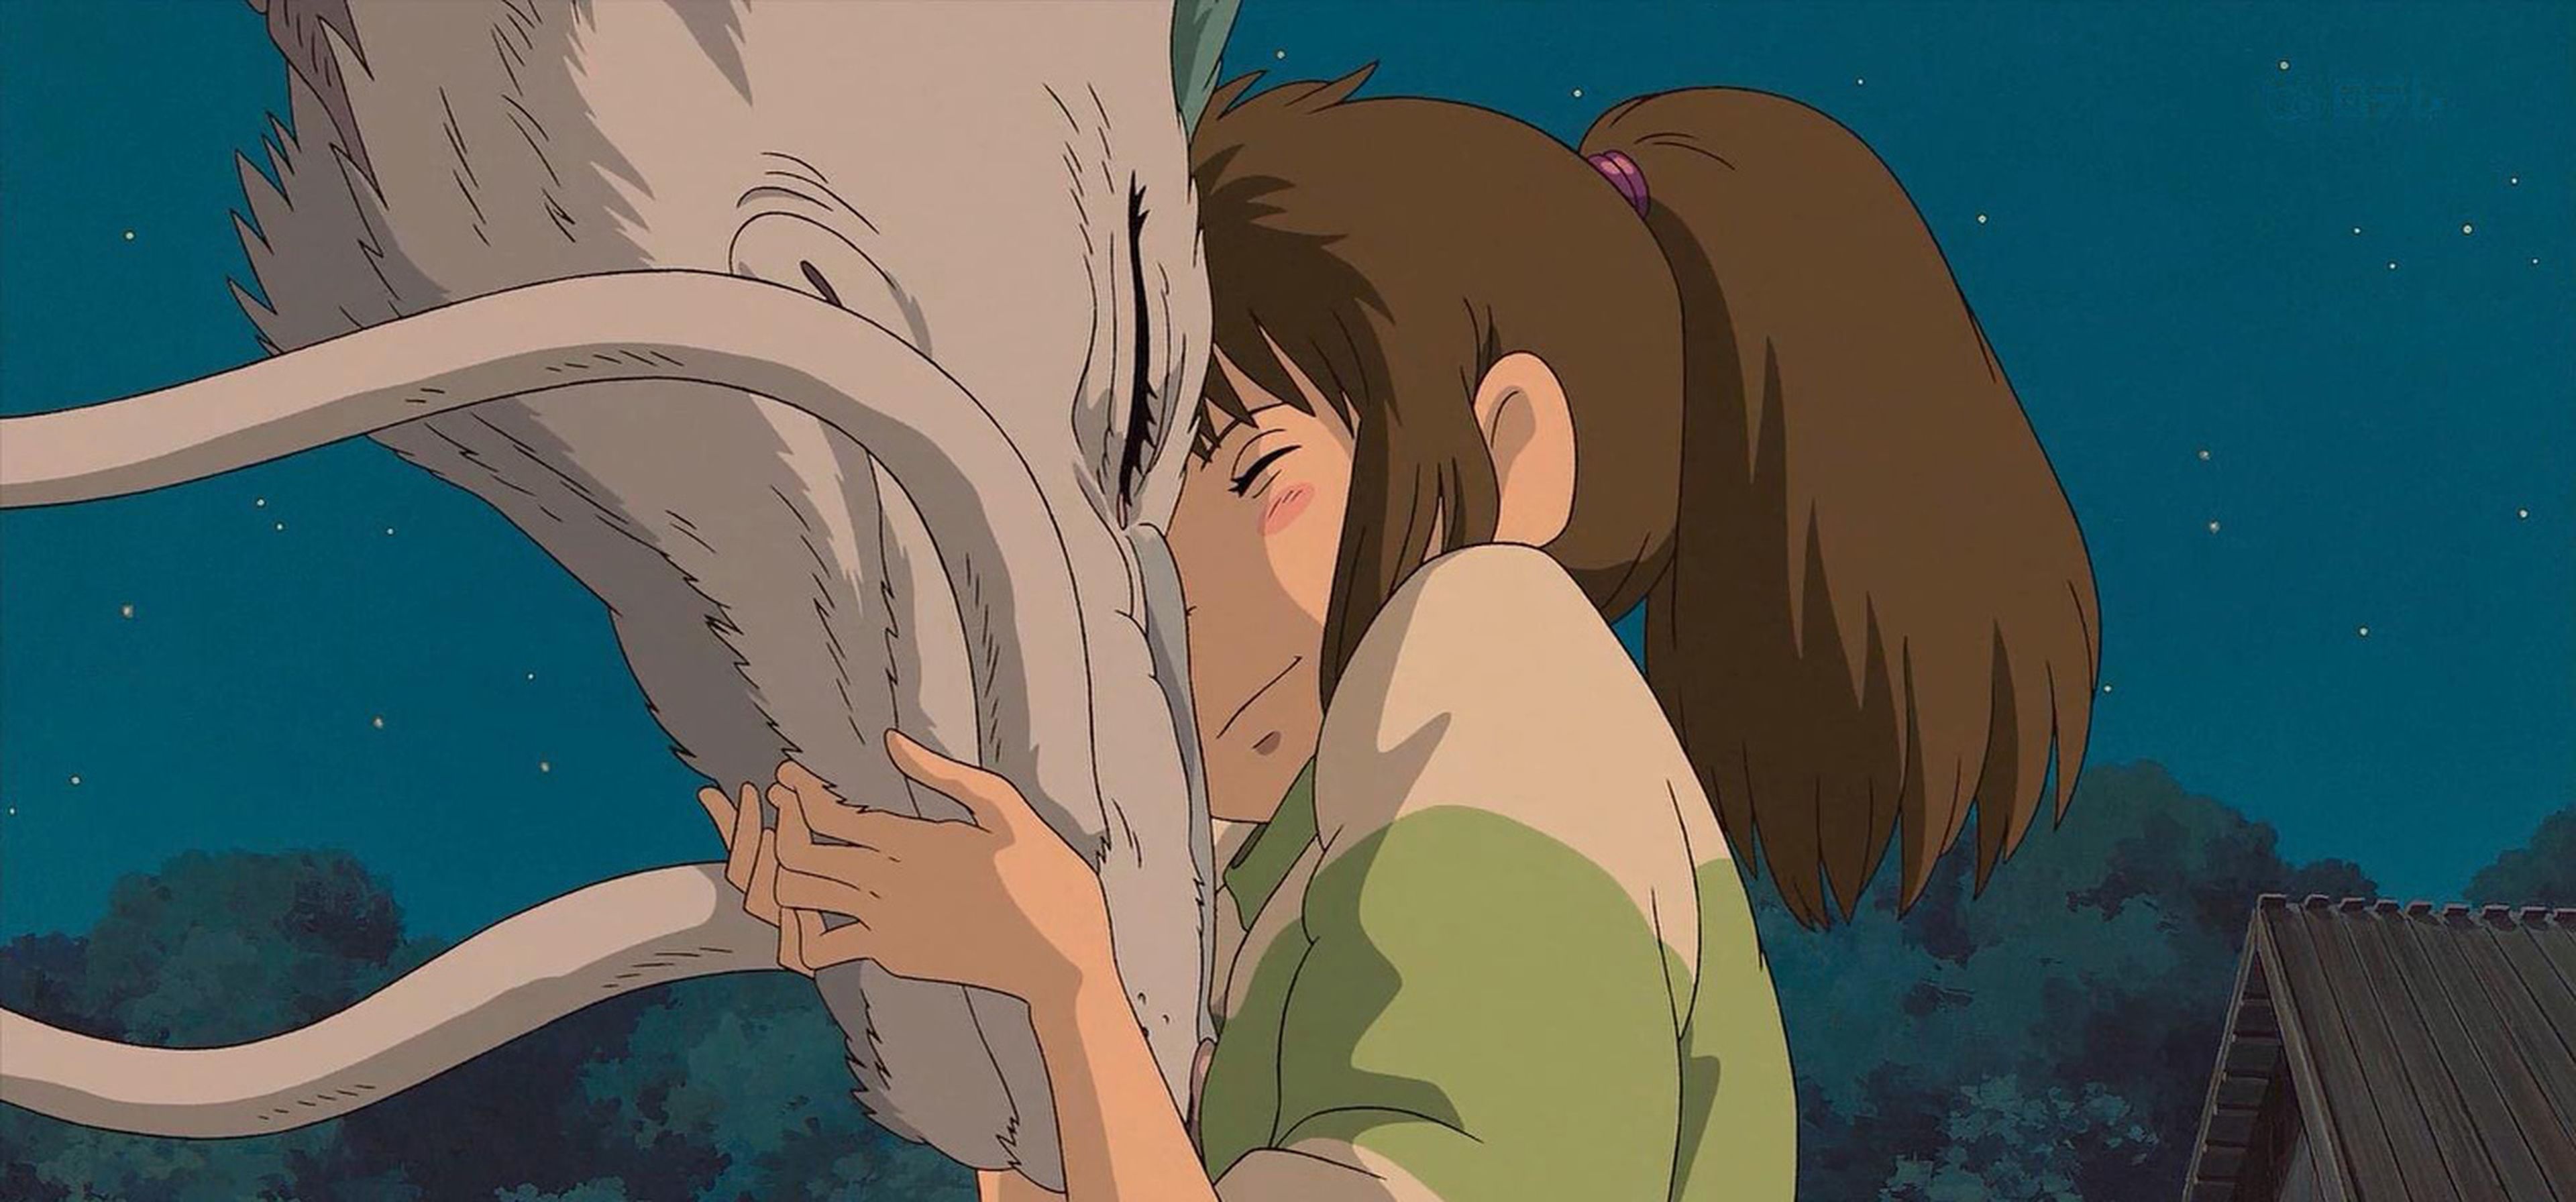 El viaje de Chihiro, de Hayao Miyazaki